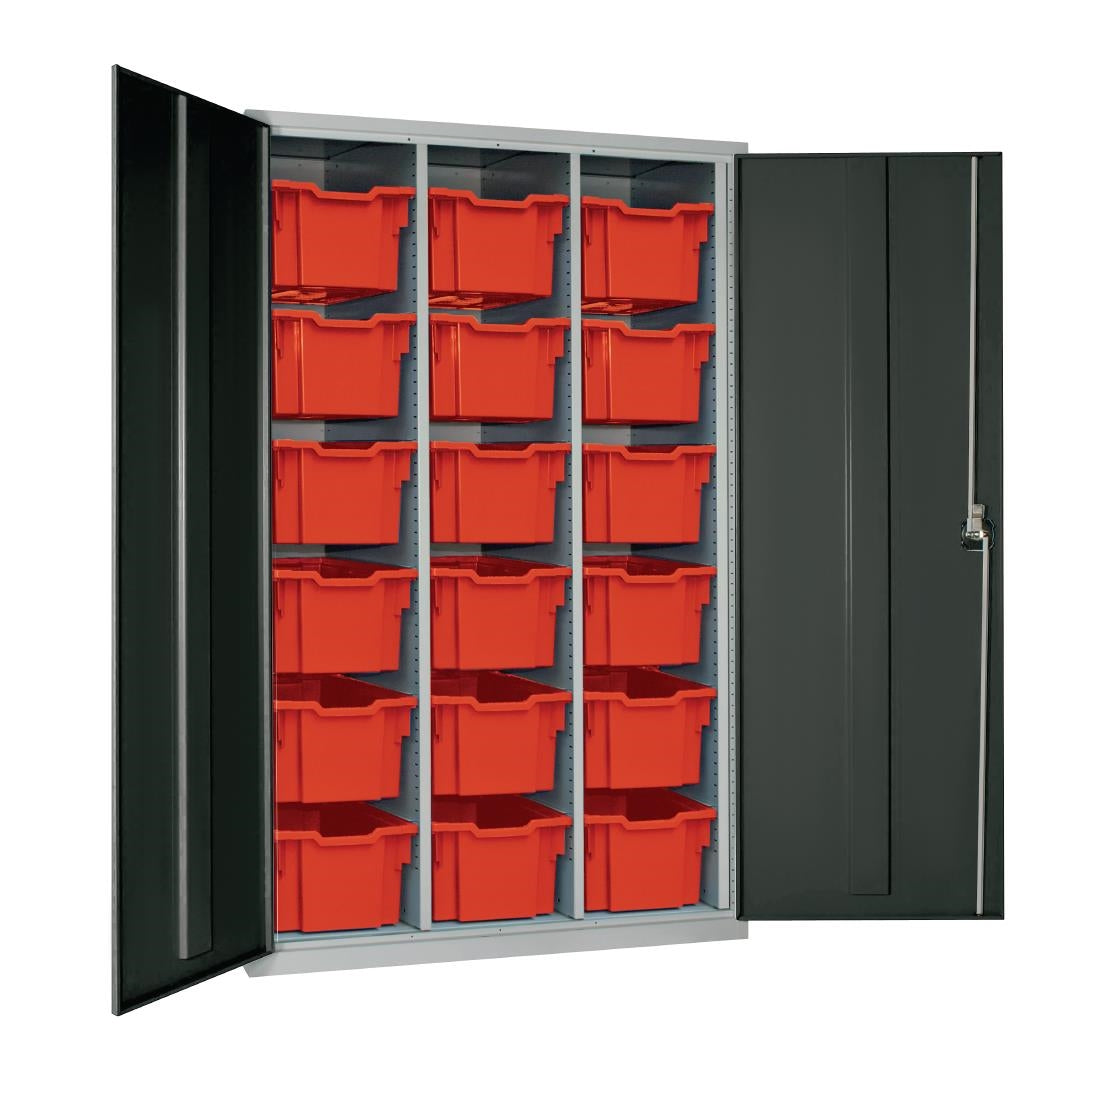 18 Tray High-Capacity Storage Cupboard - Dark Grey with Red Trays